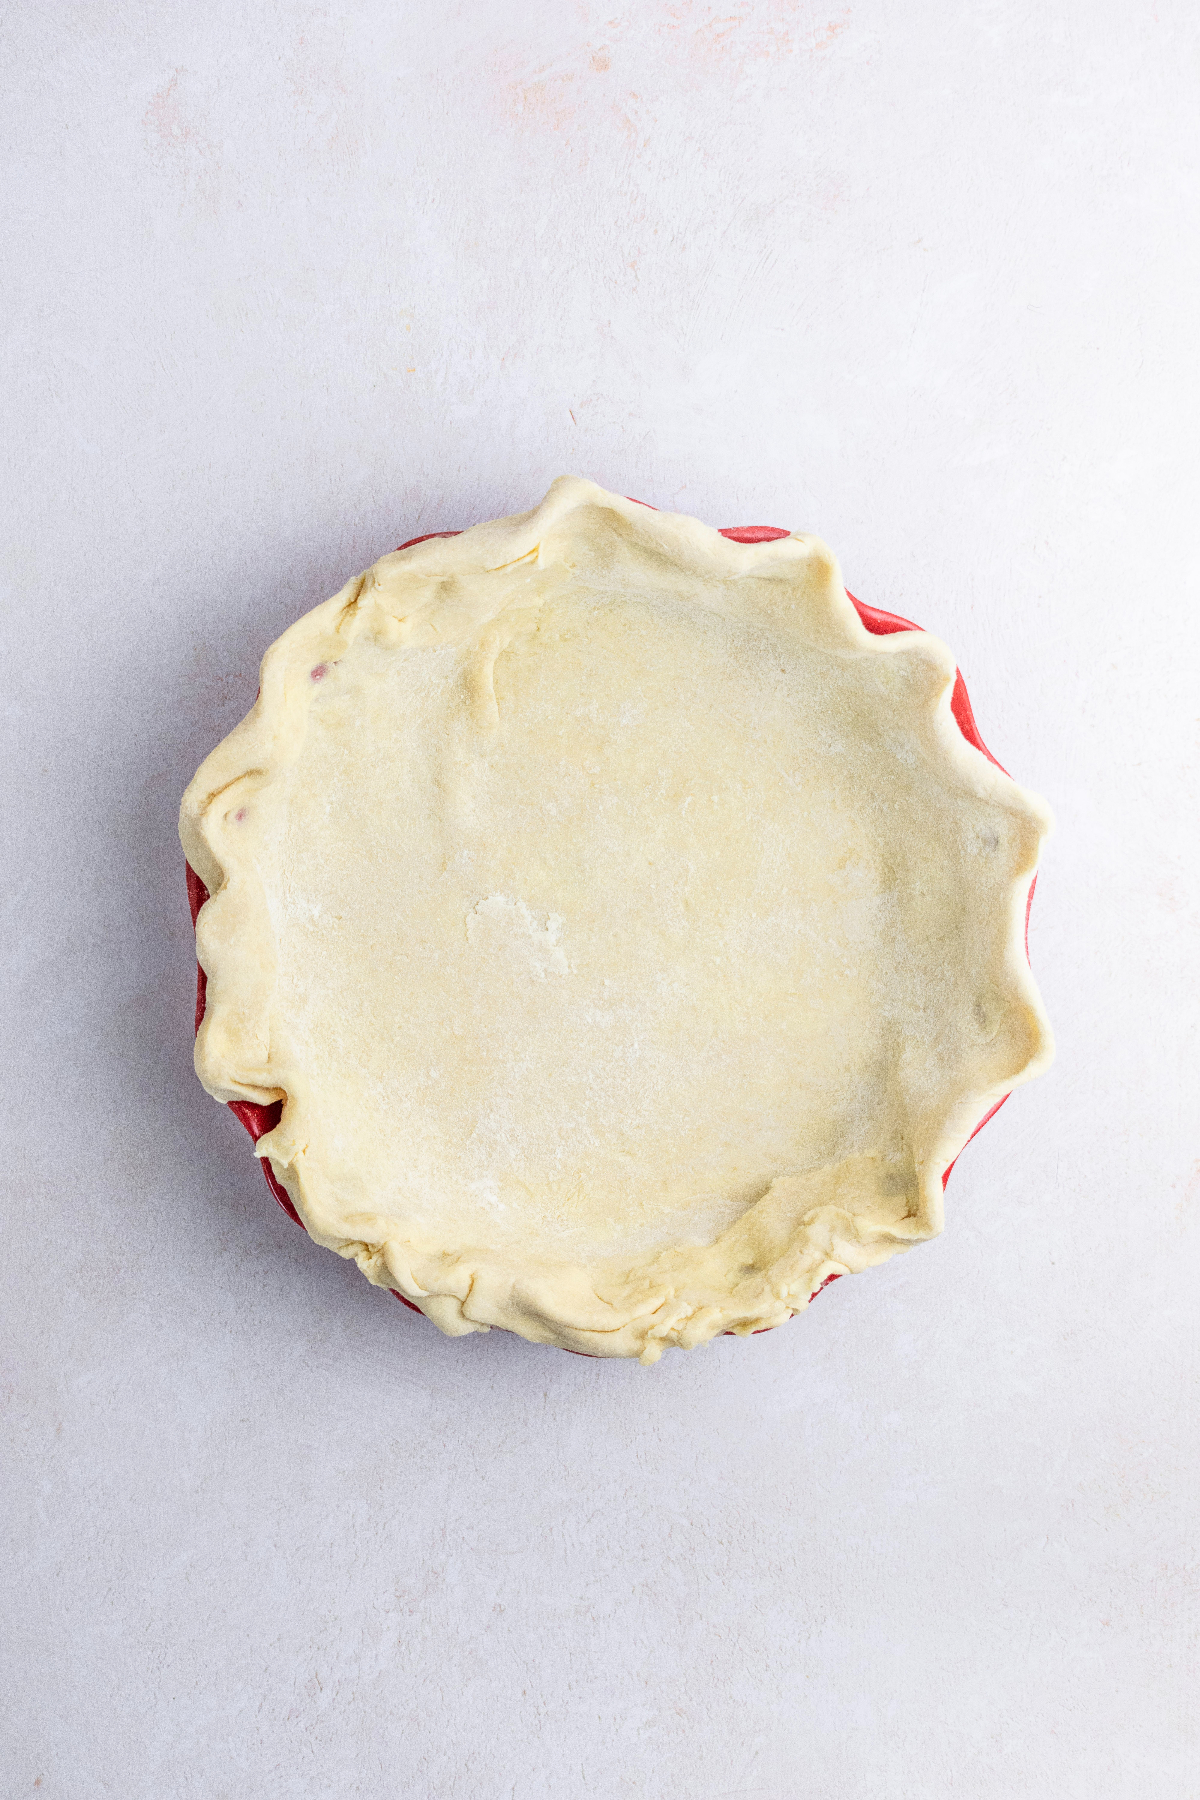 Pie dough in a red pie plate.